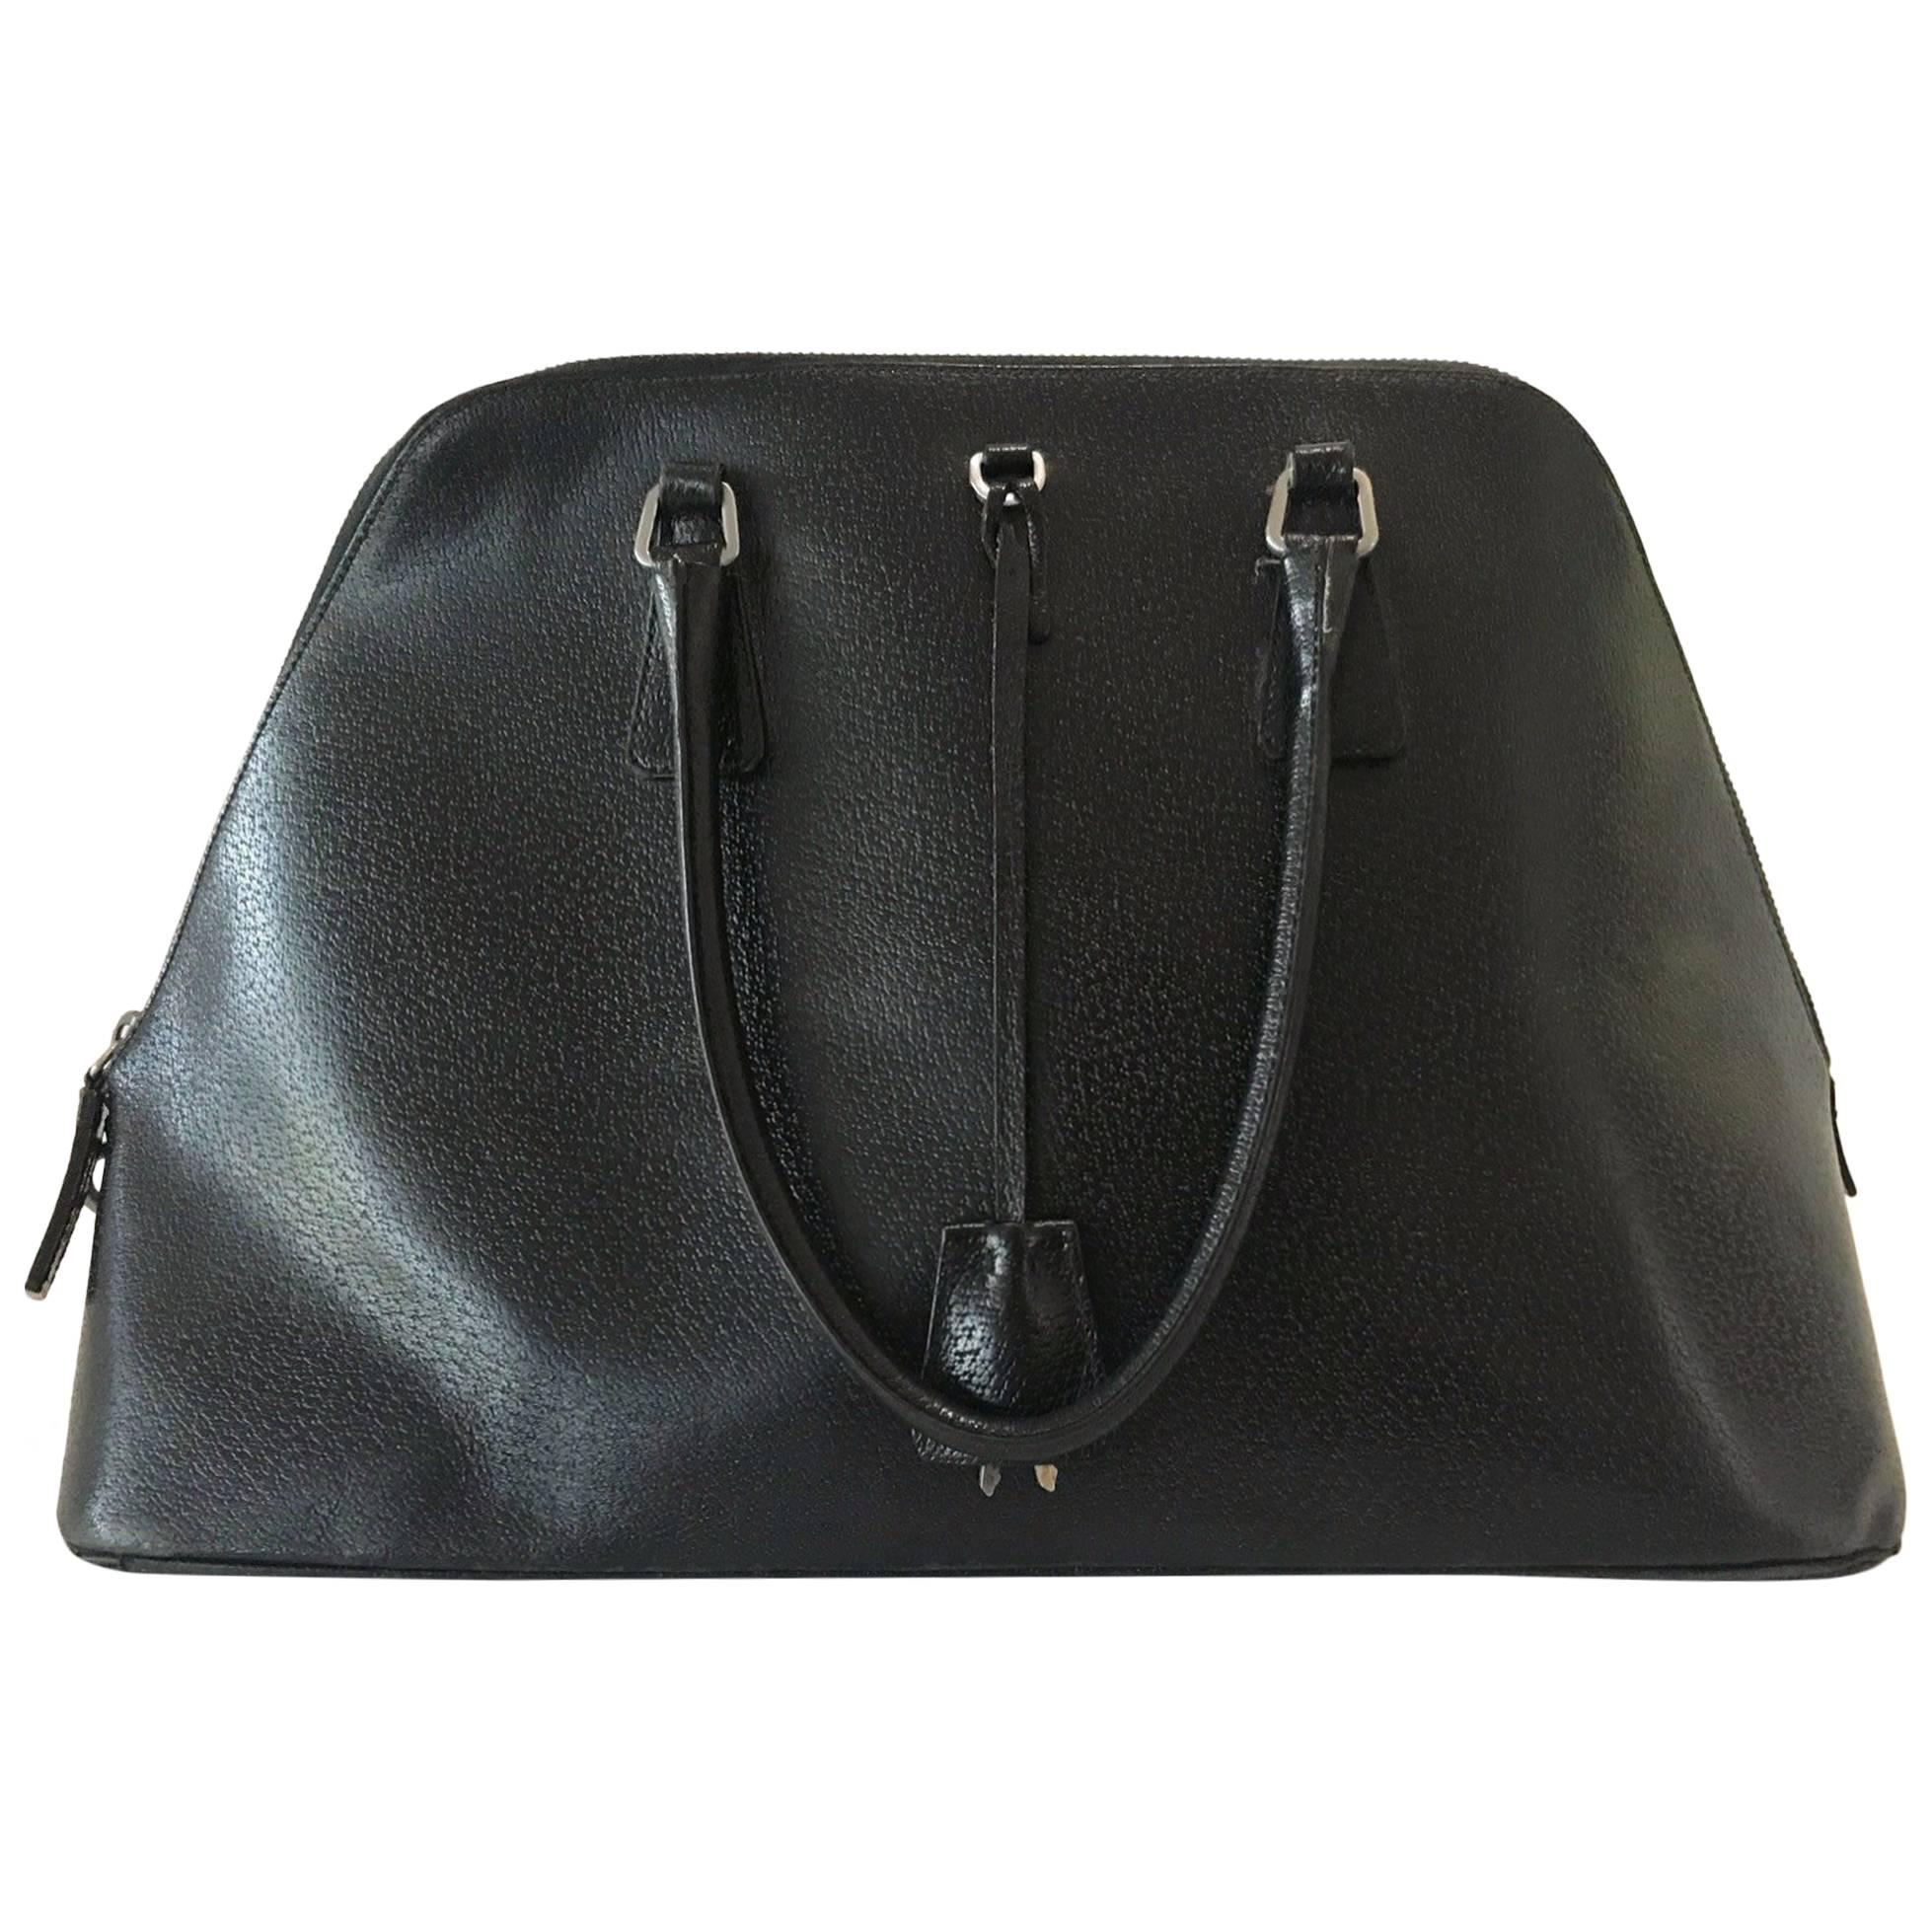 Black Beauty Prada Handbag with Key and Lock, Authentic Prada Leather Bag For Sale